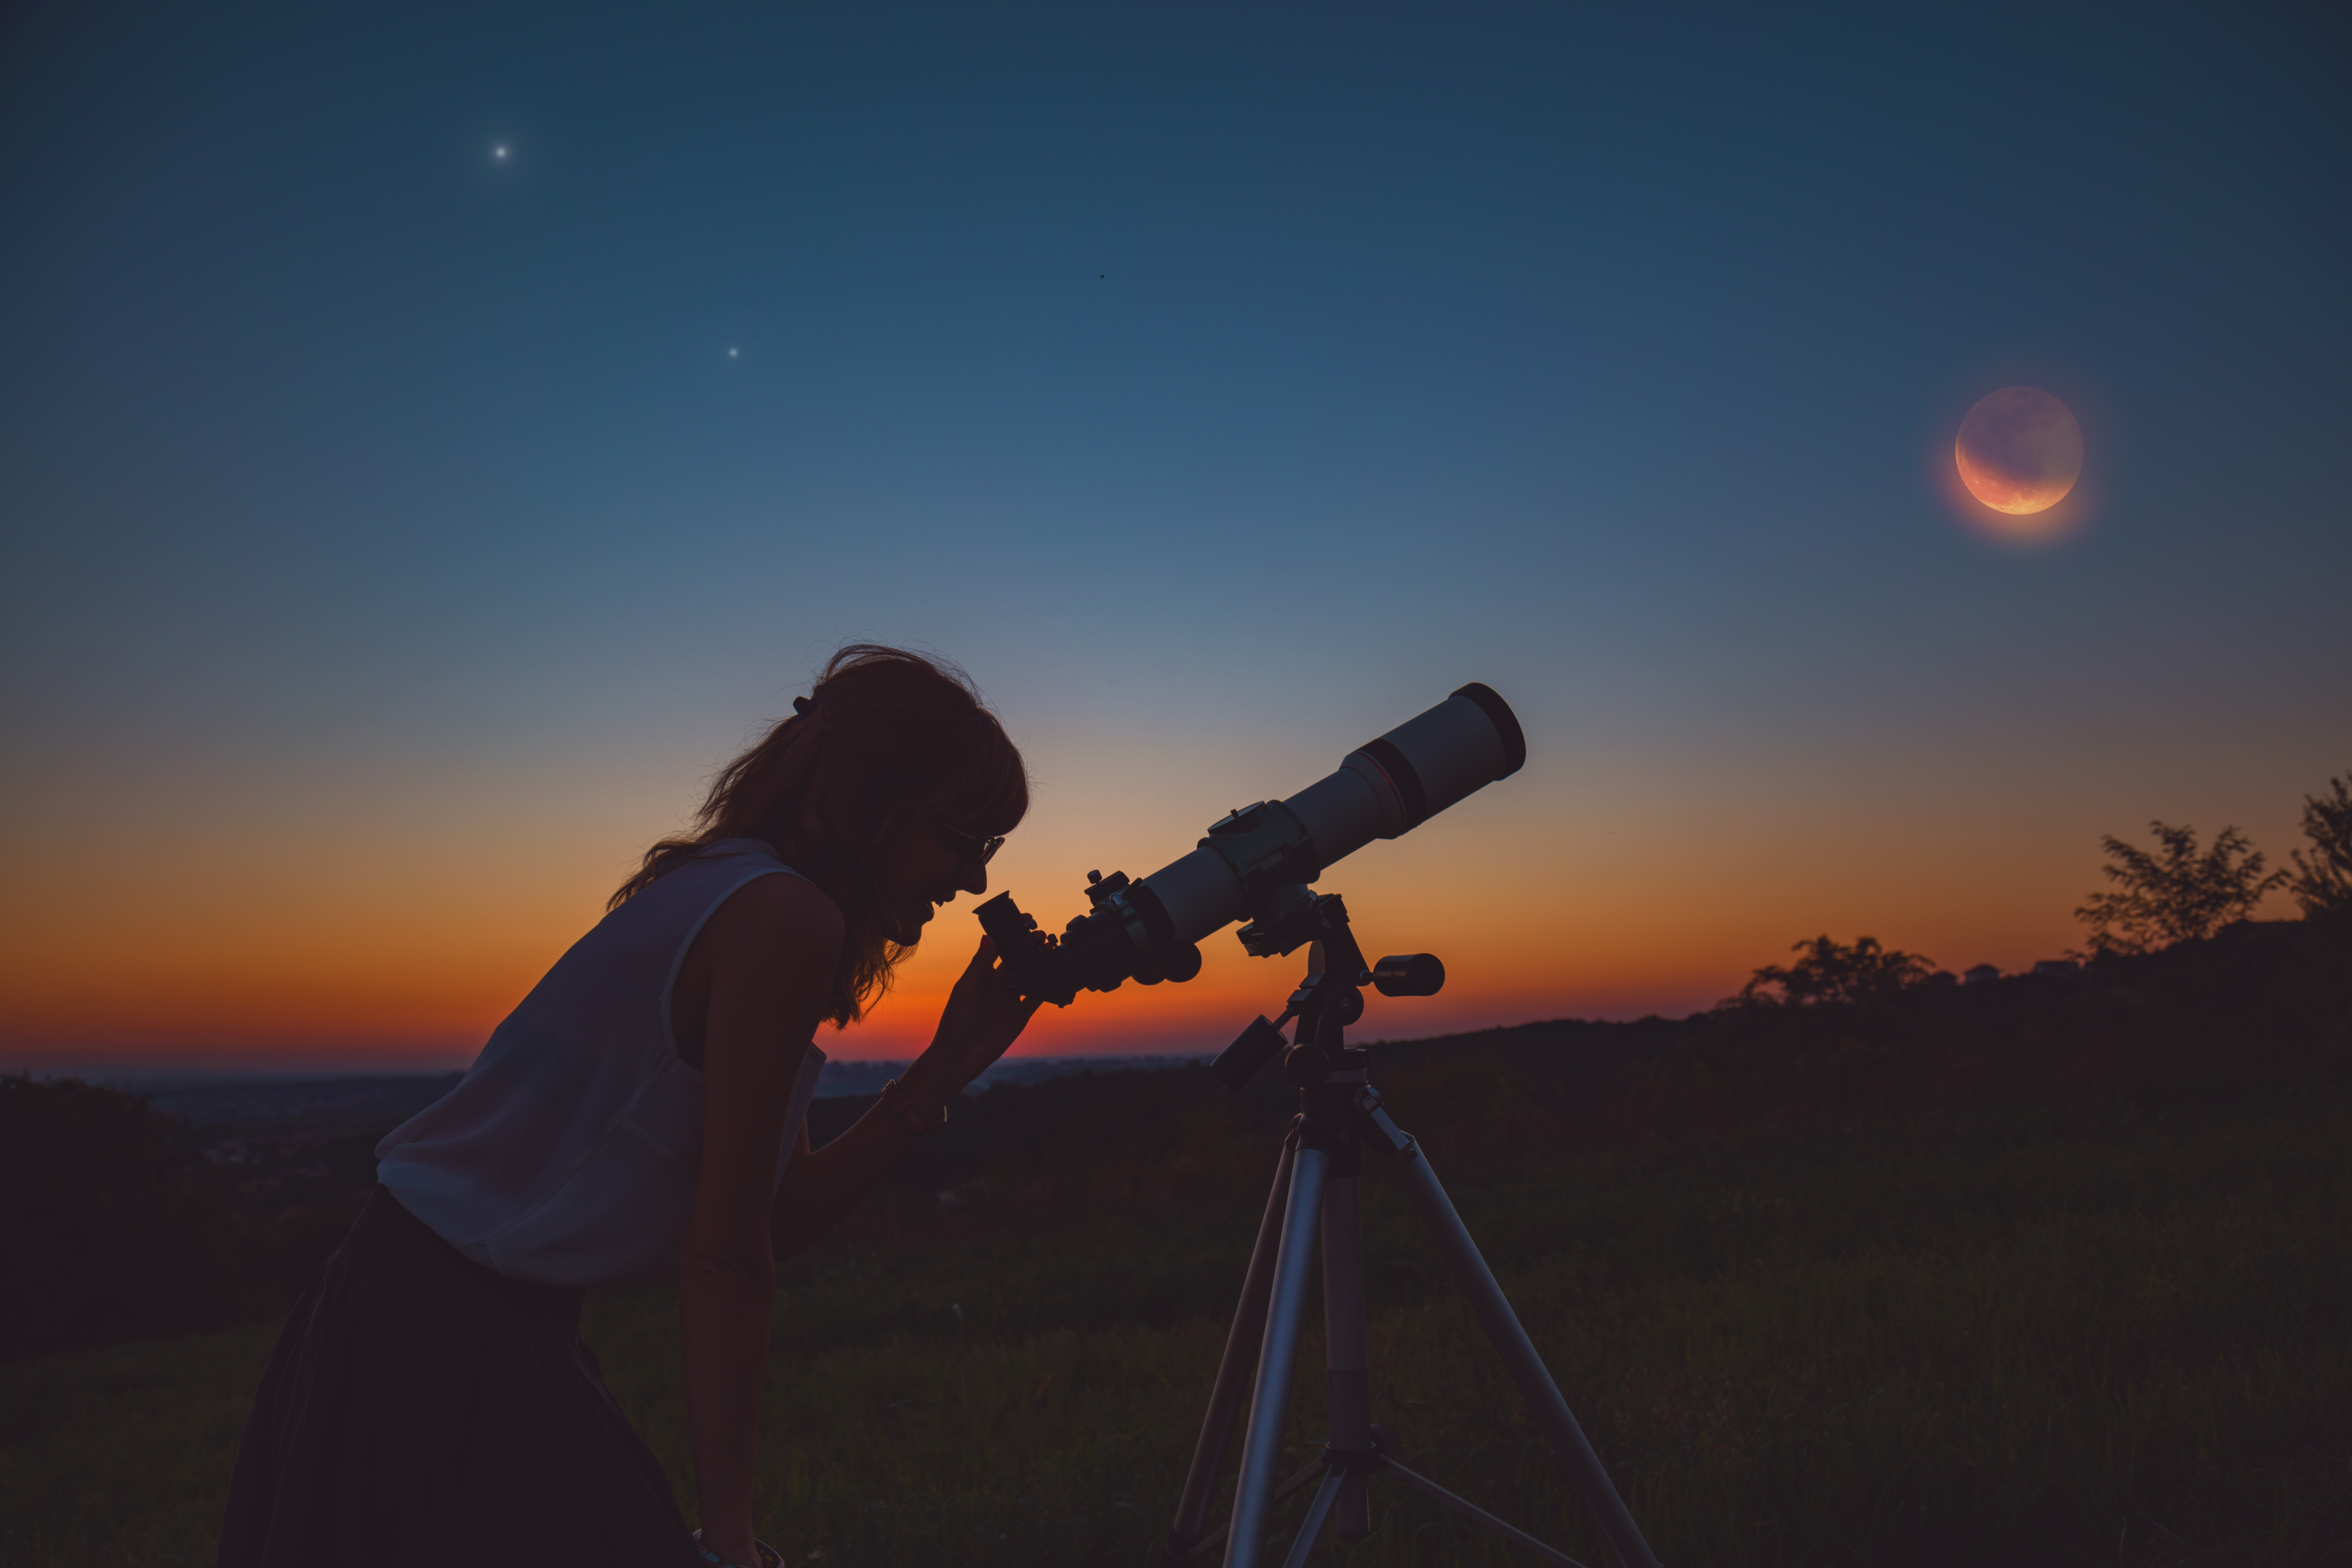 Girl viewing a lunar eclipse through a telescope